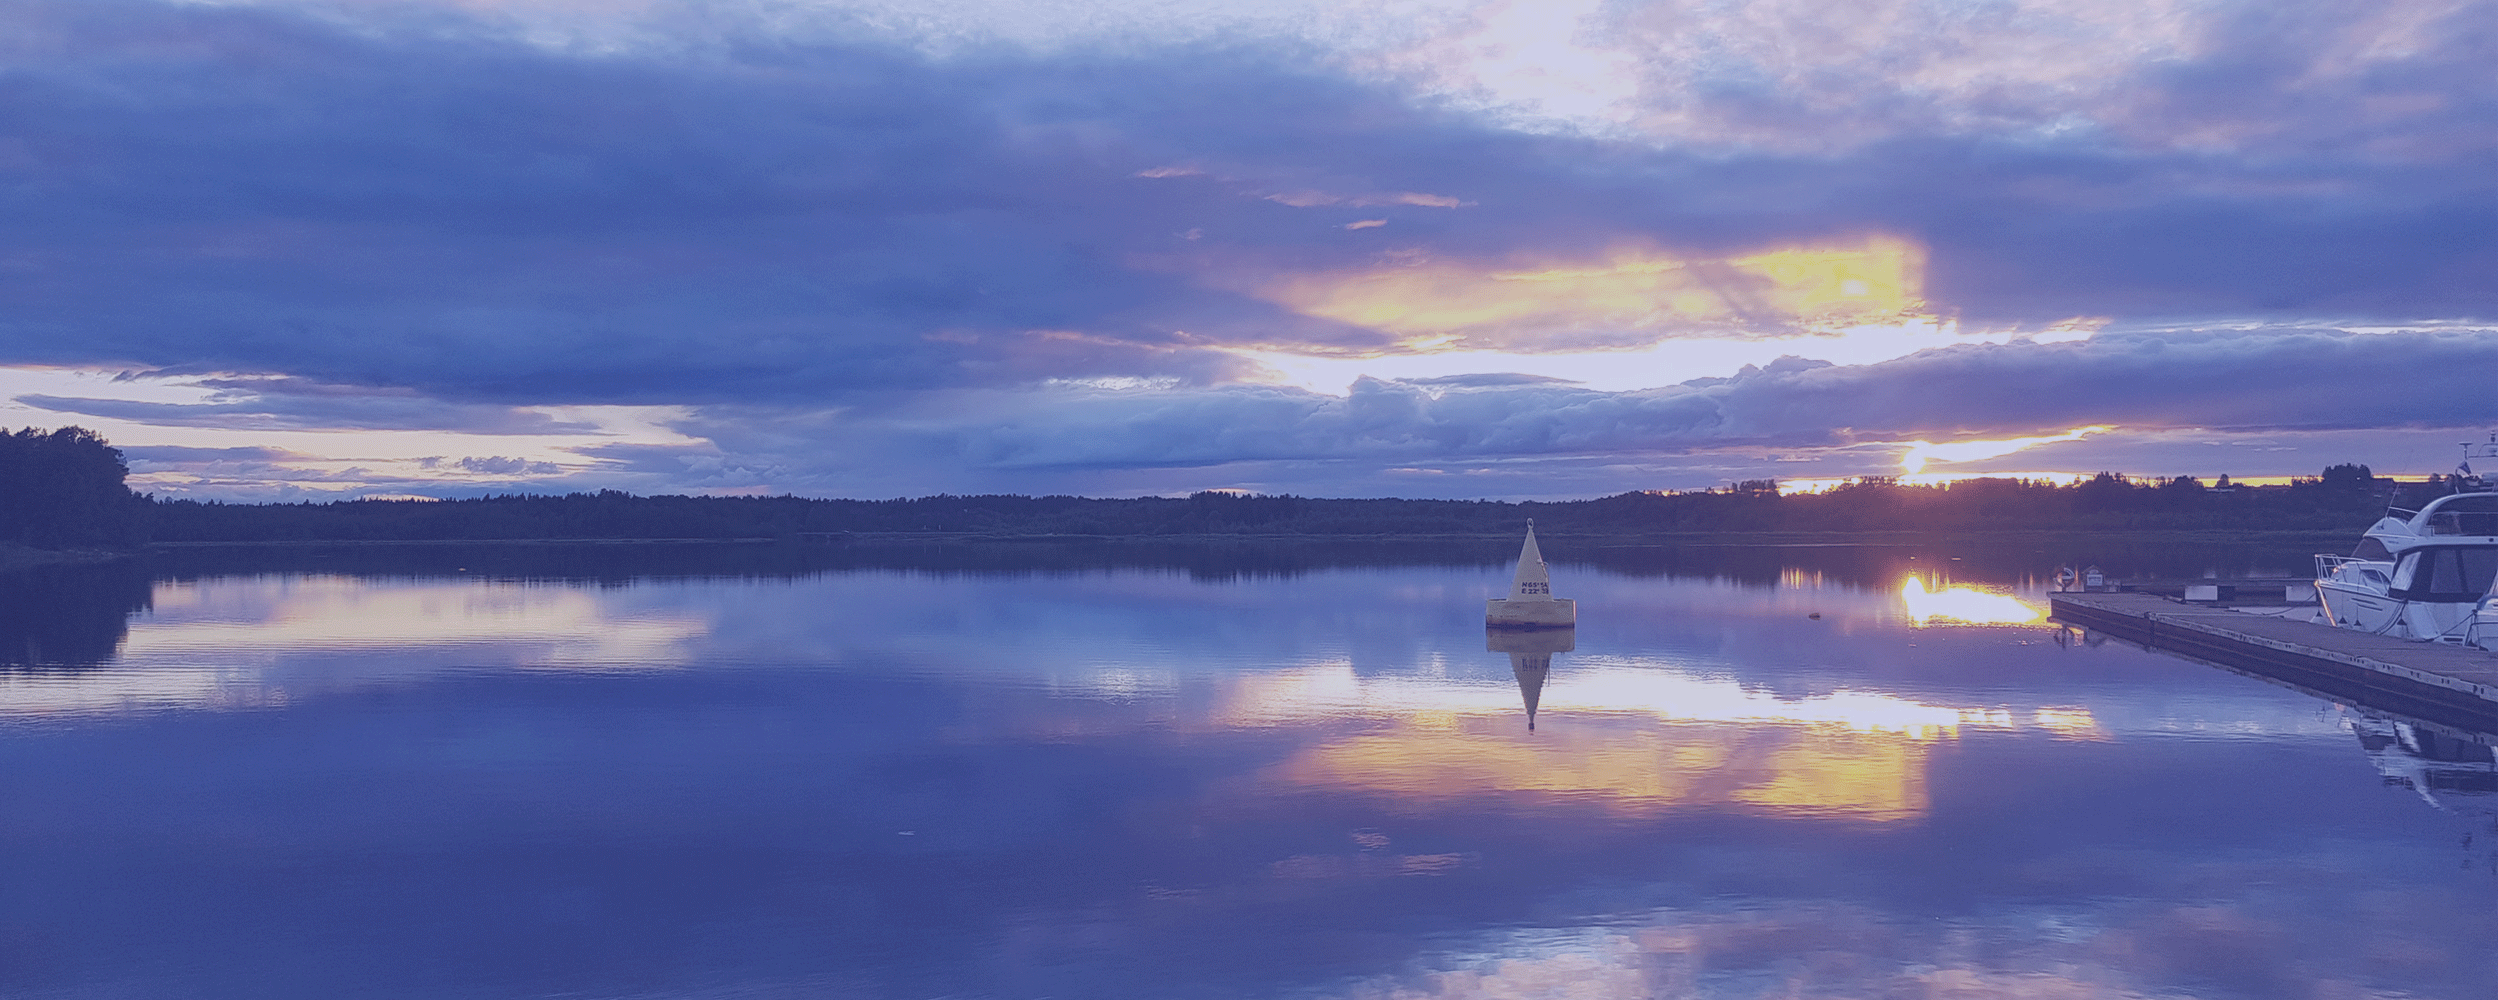 Segelsport-Ostsee_Hintergrundbild1